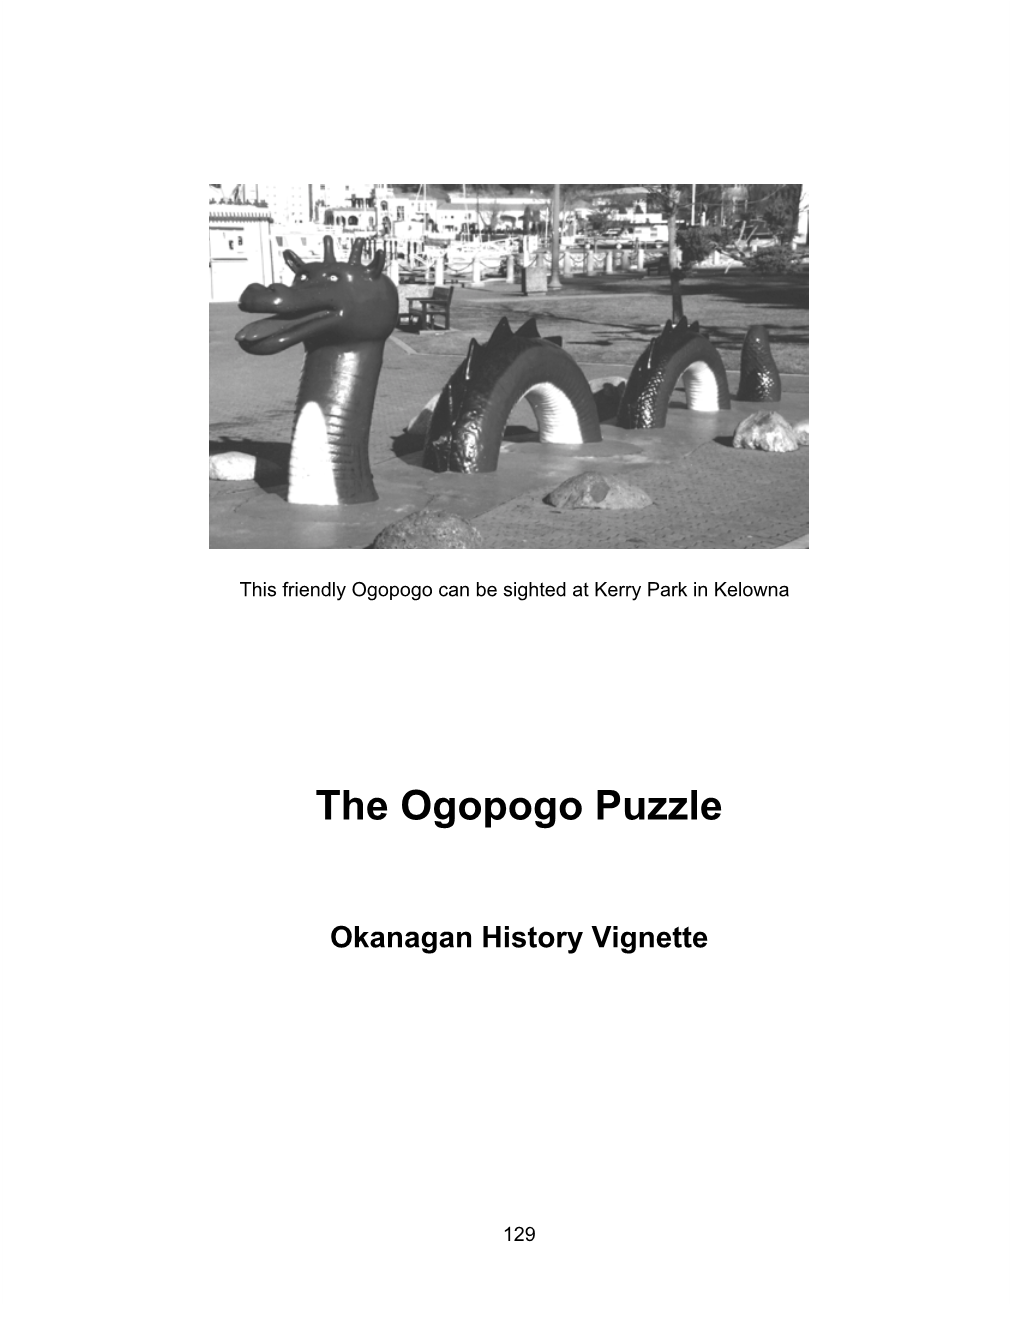 The Ogopogo Puzzle